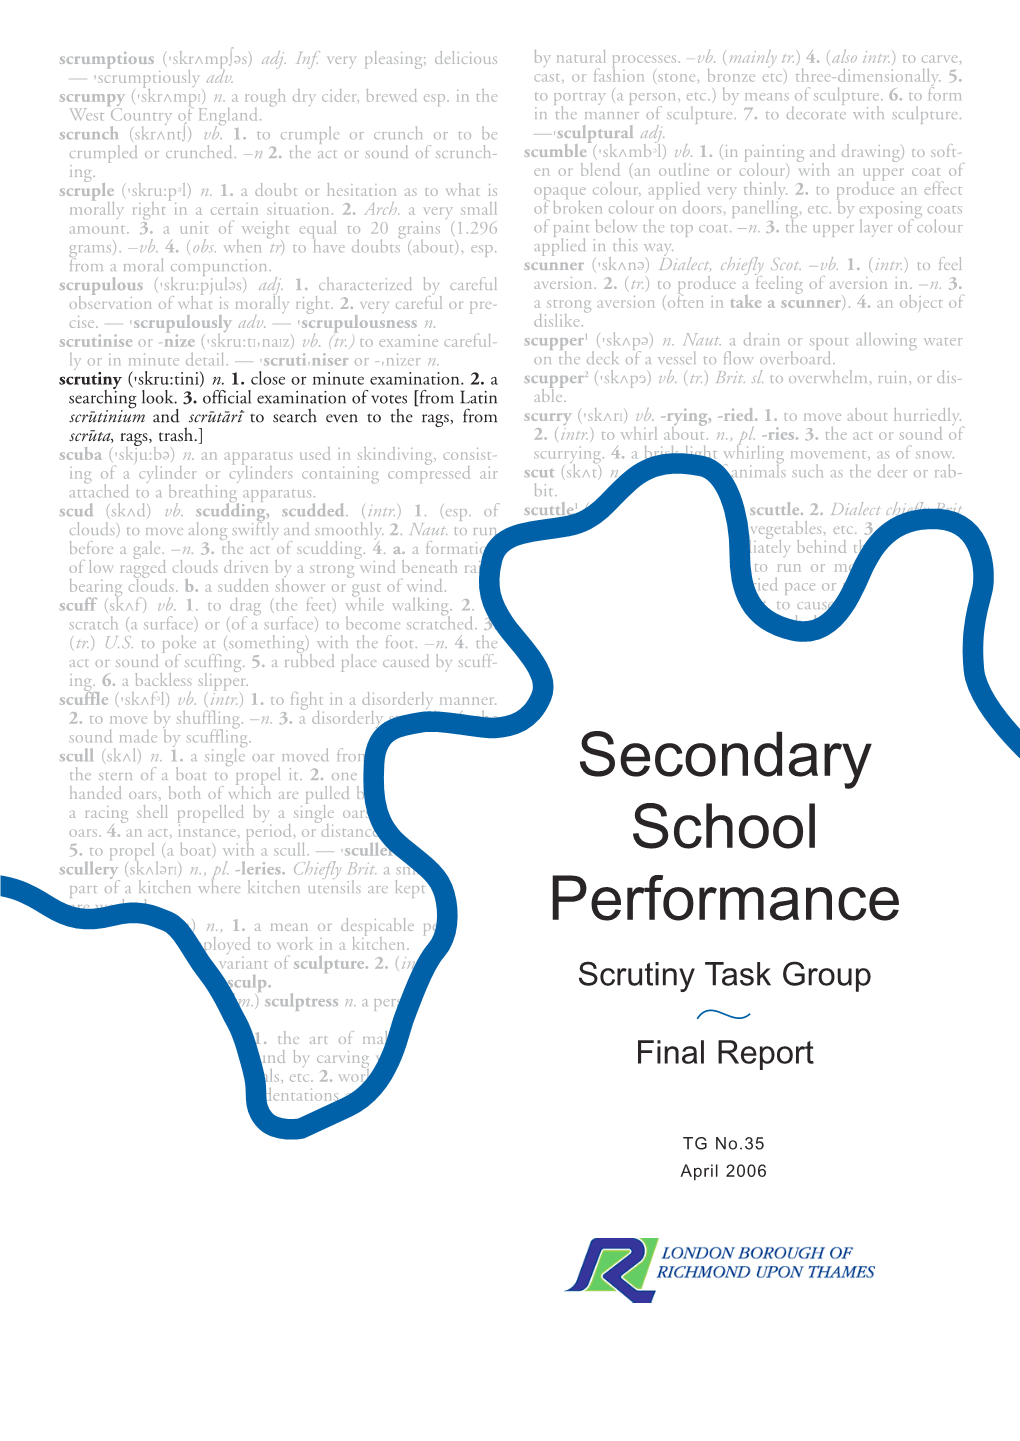 Secondary School Performance